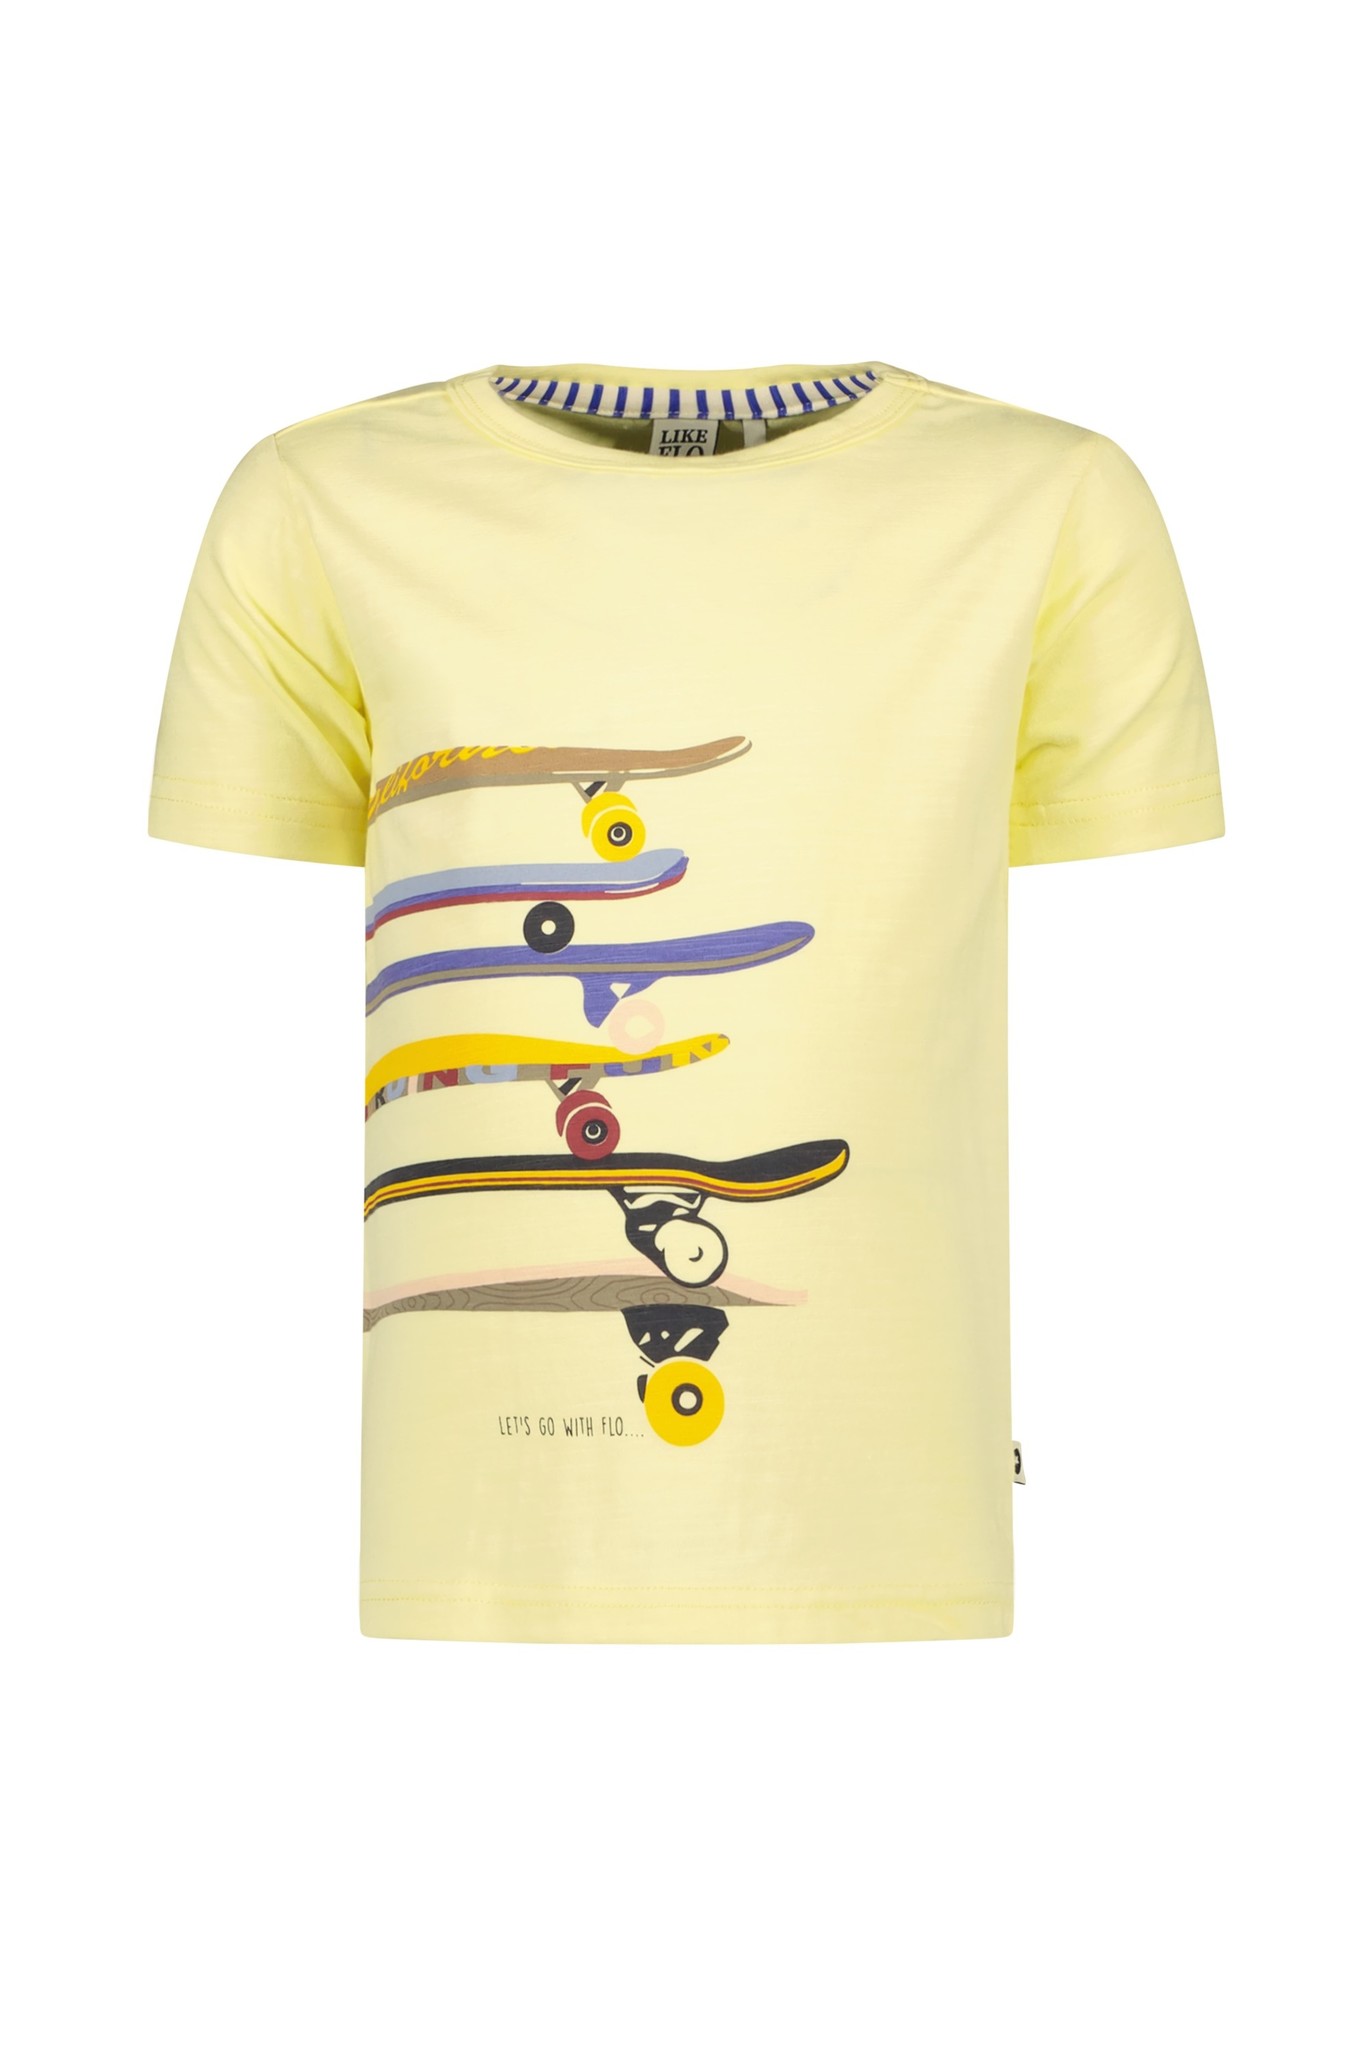 Like Flo - T-Shirt - Soft yellow - Maat 110